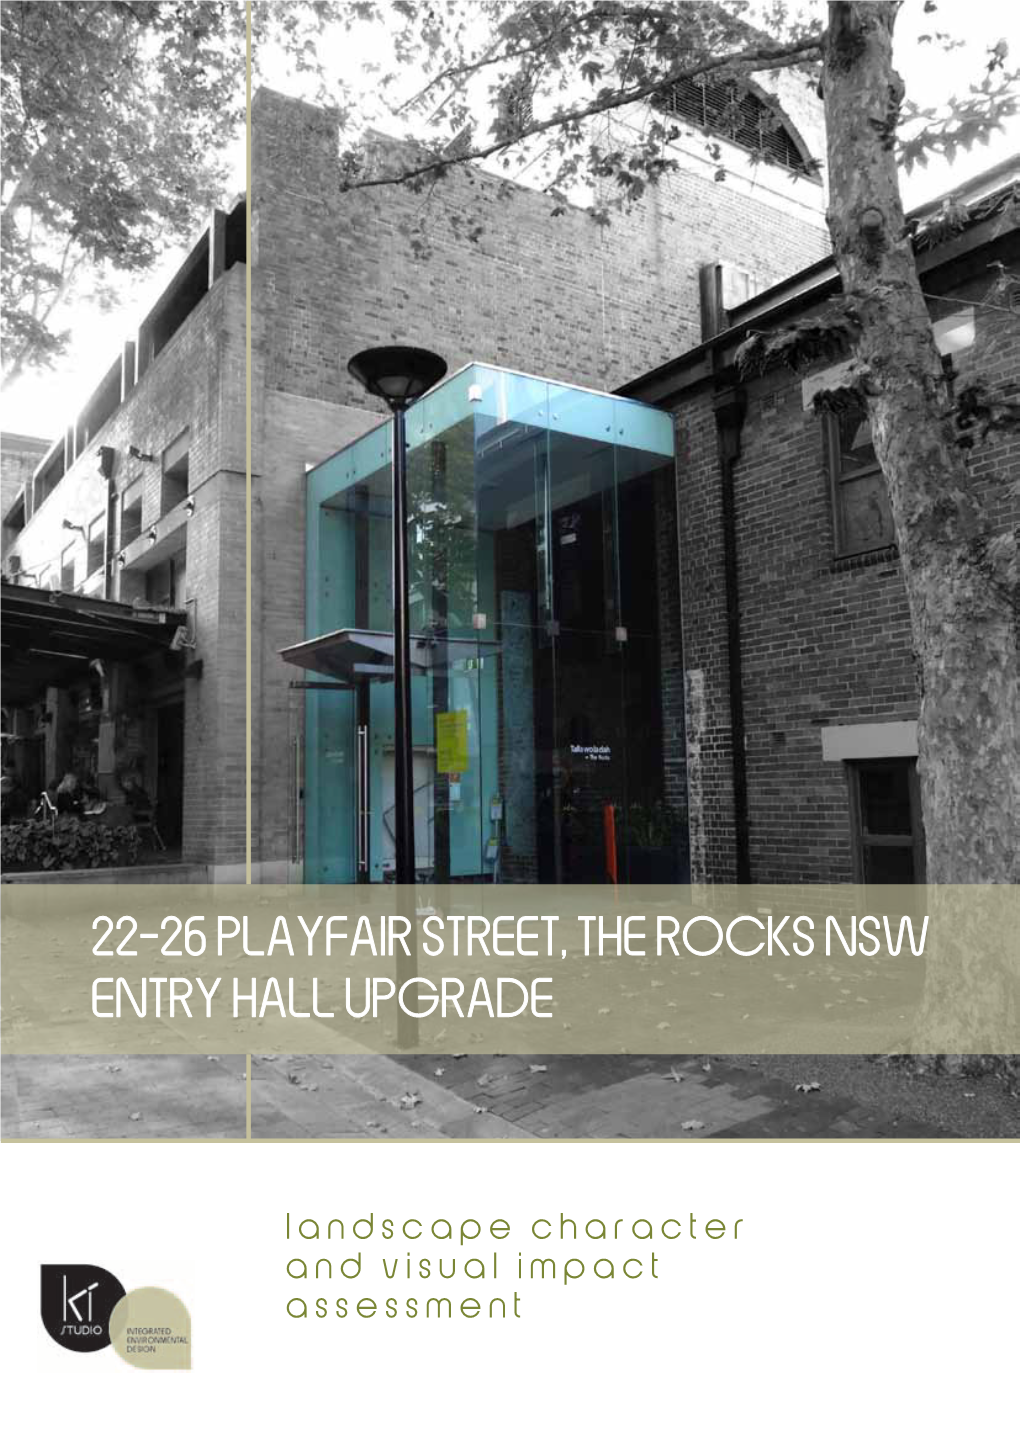 22-26 Playfair Street, the Rocks Nsw Entry Hall Upgrade